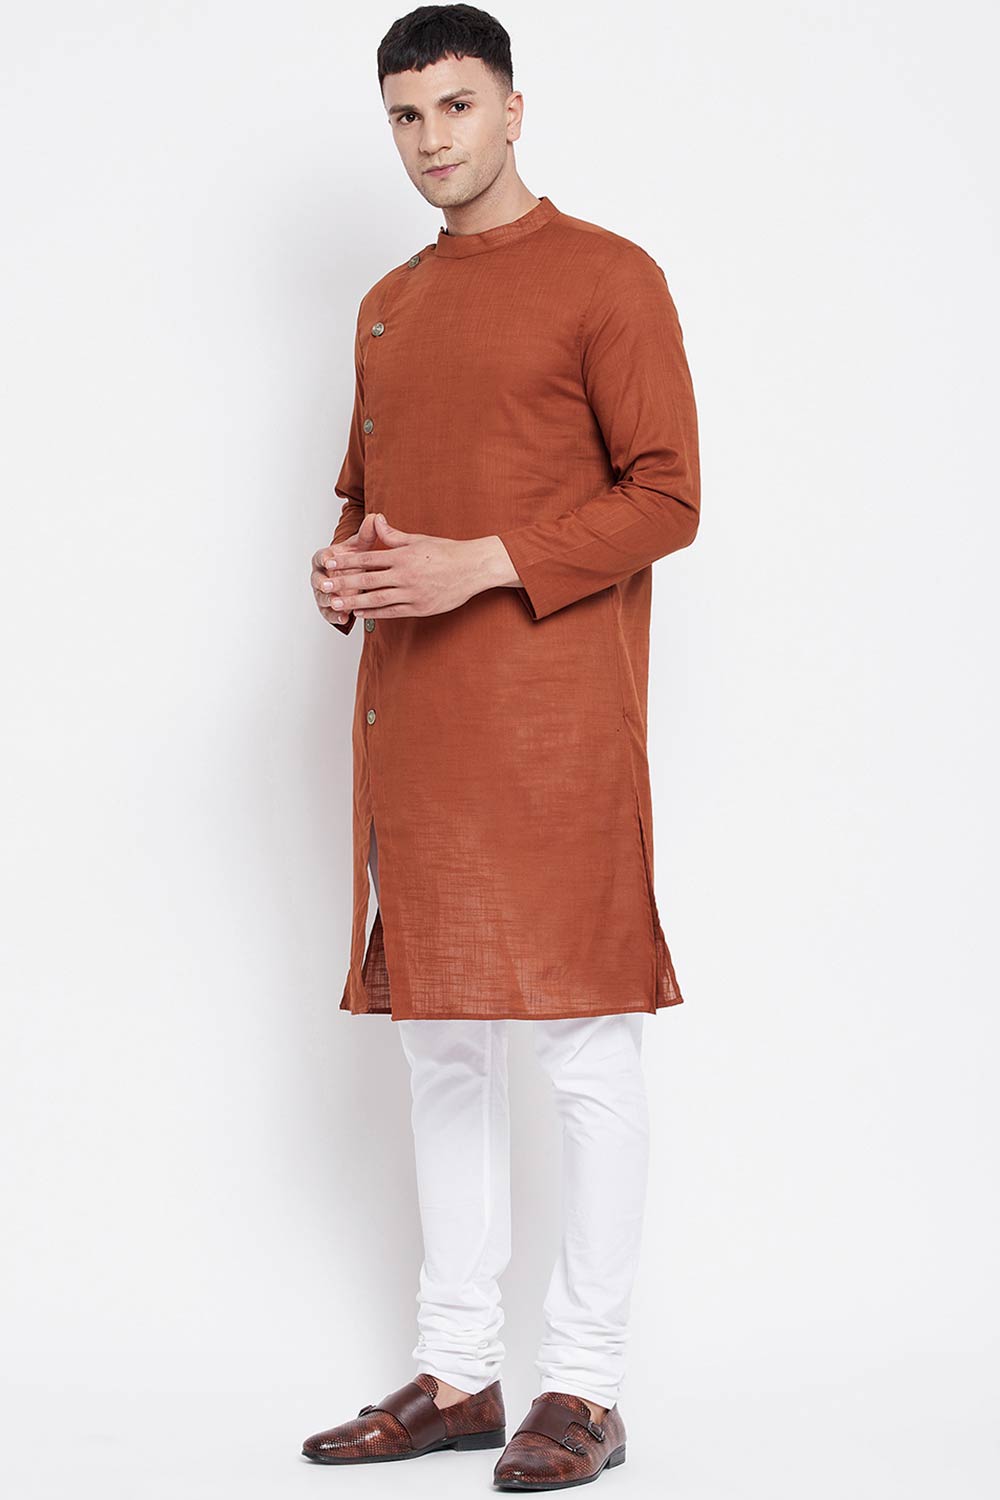 Men's Pure Cotton Solid Sherwani Top Kurta Top in Brown